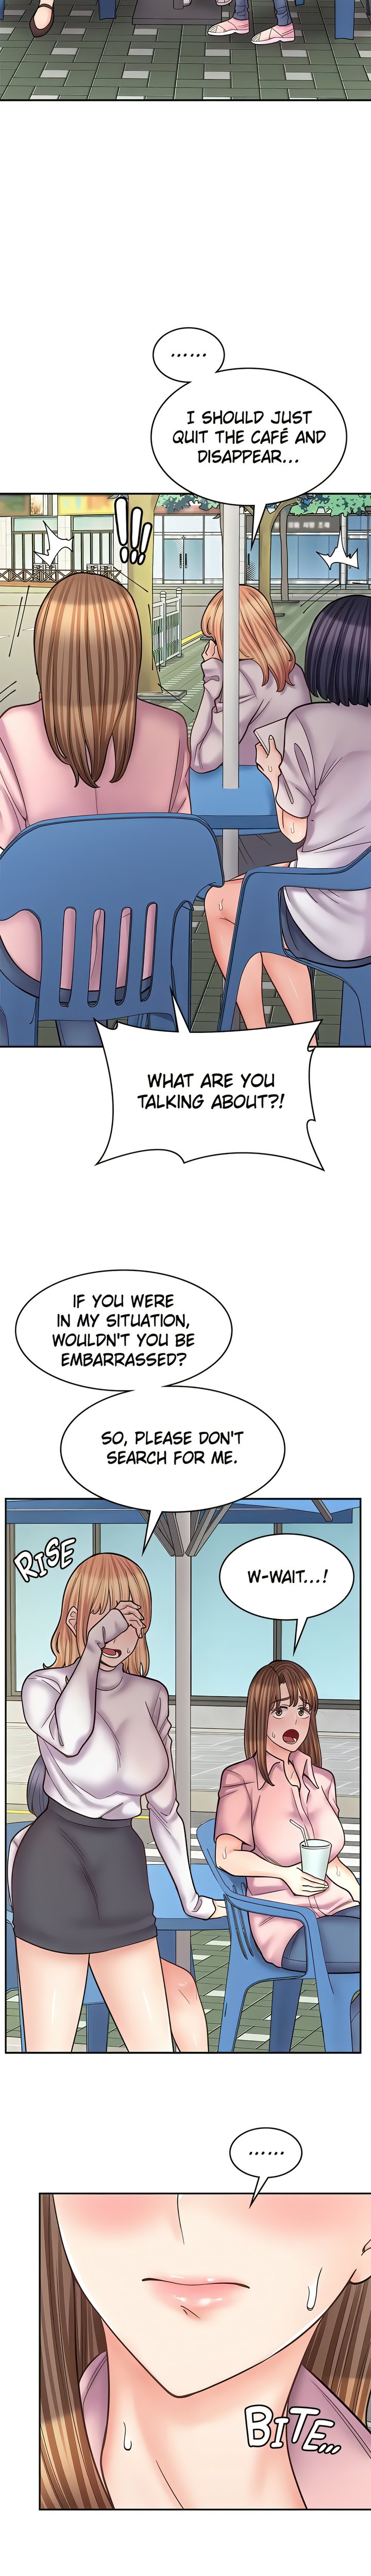 Erotic Manga Café Girls - Chapter 51 Page 4